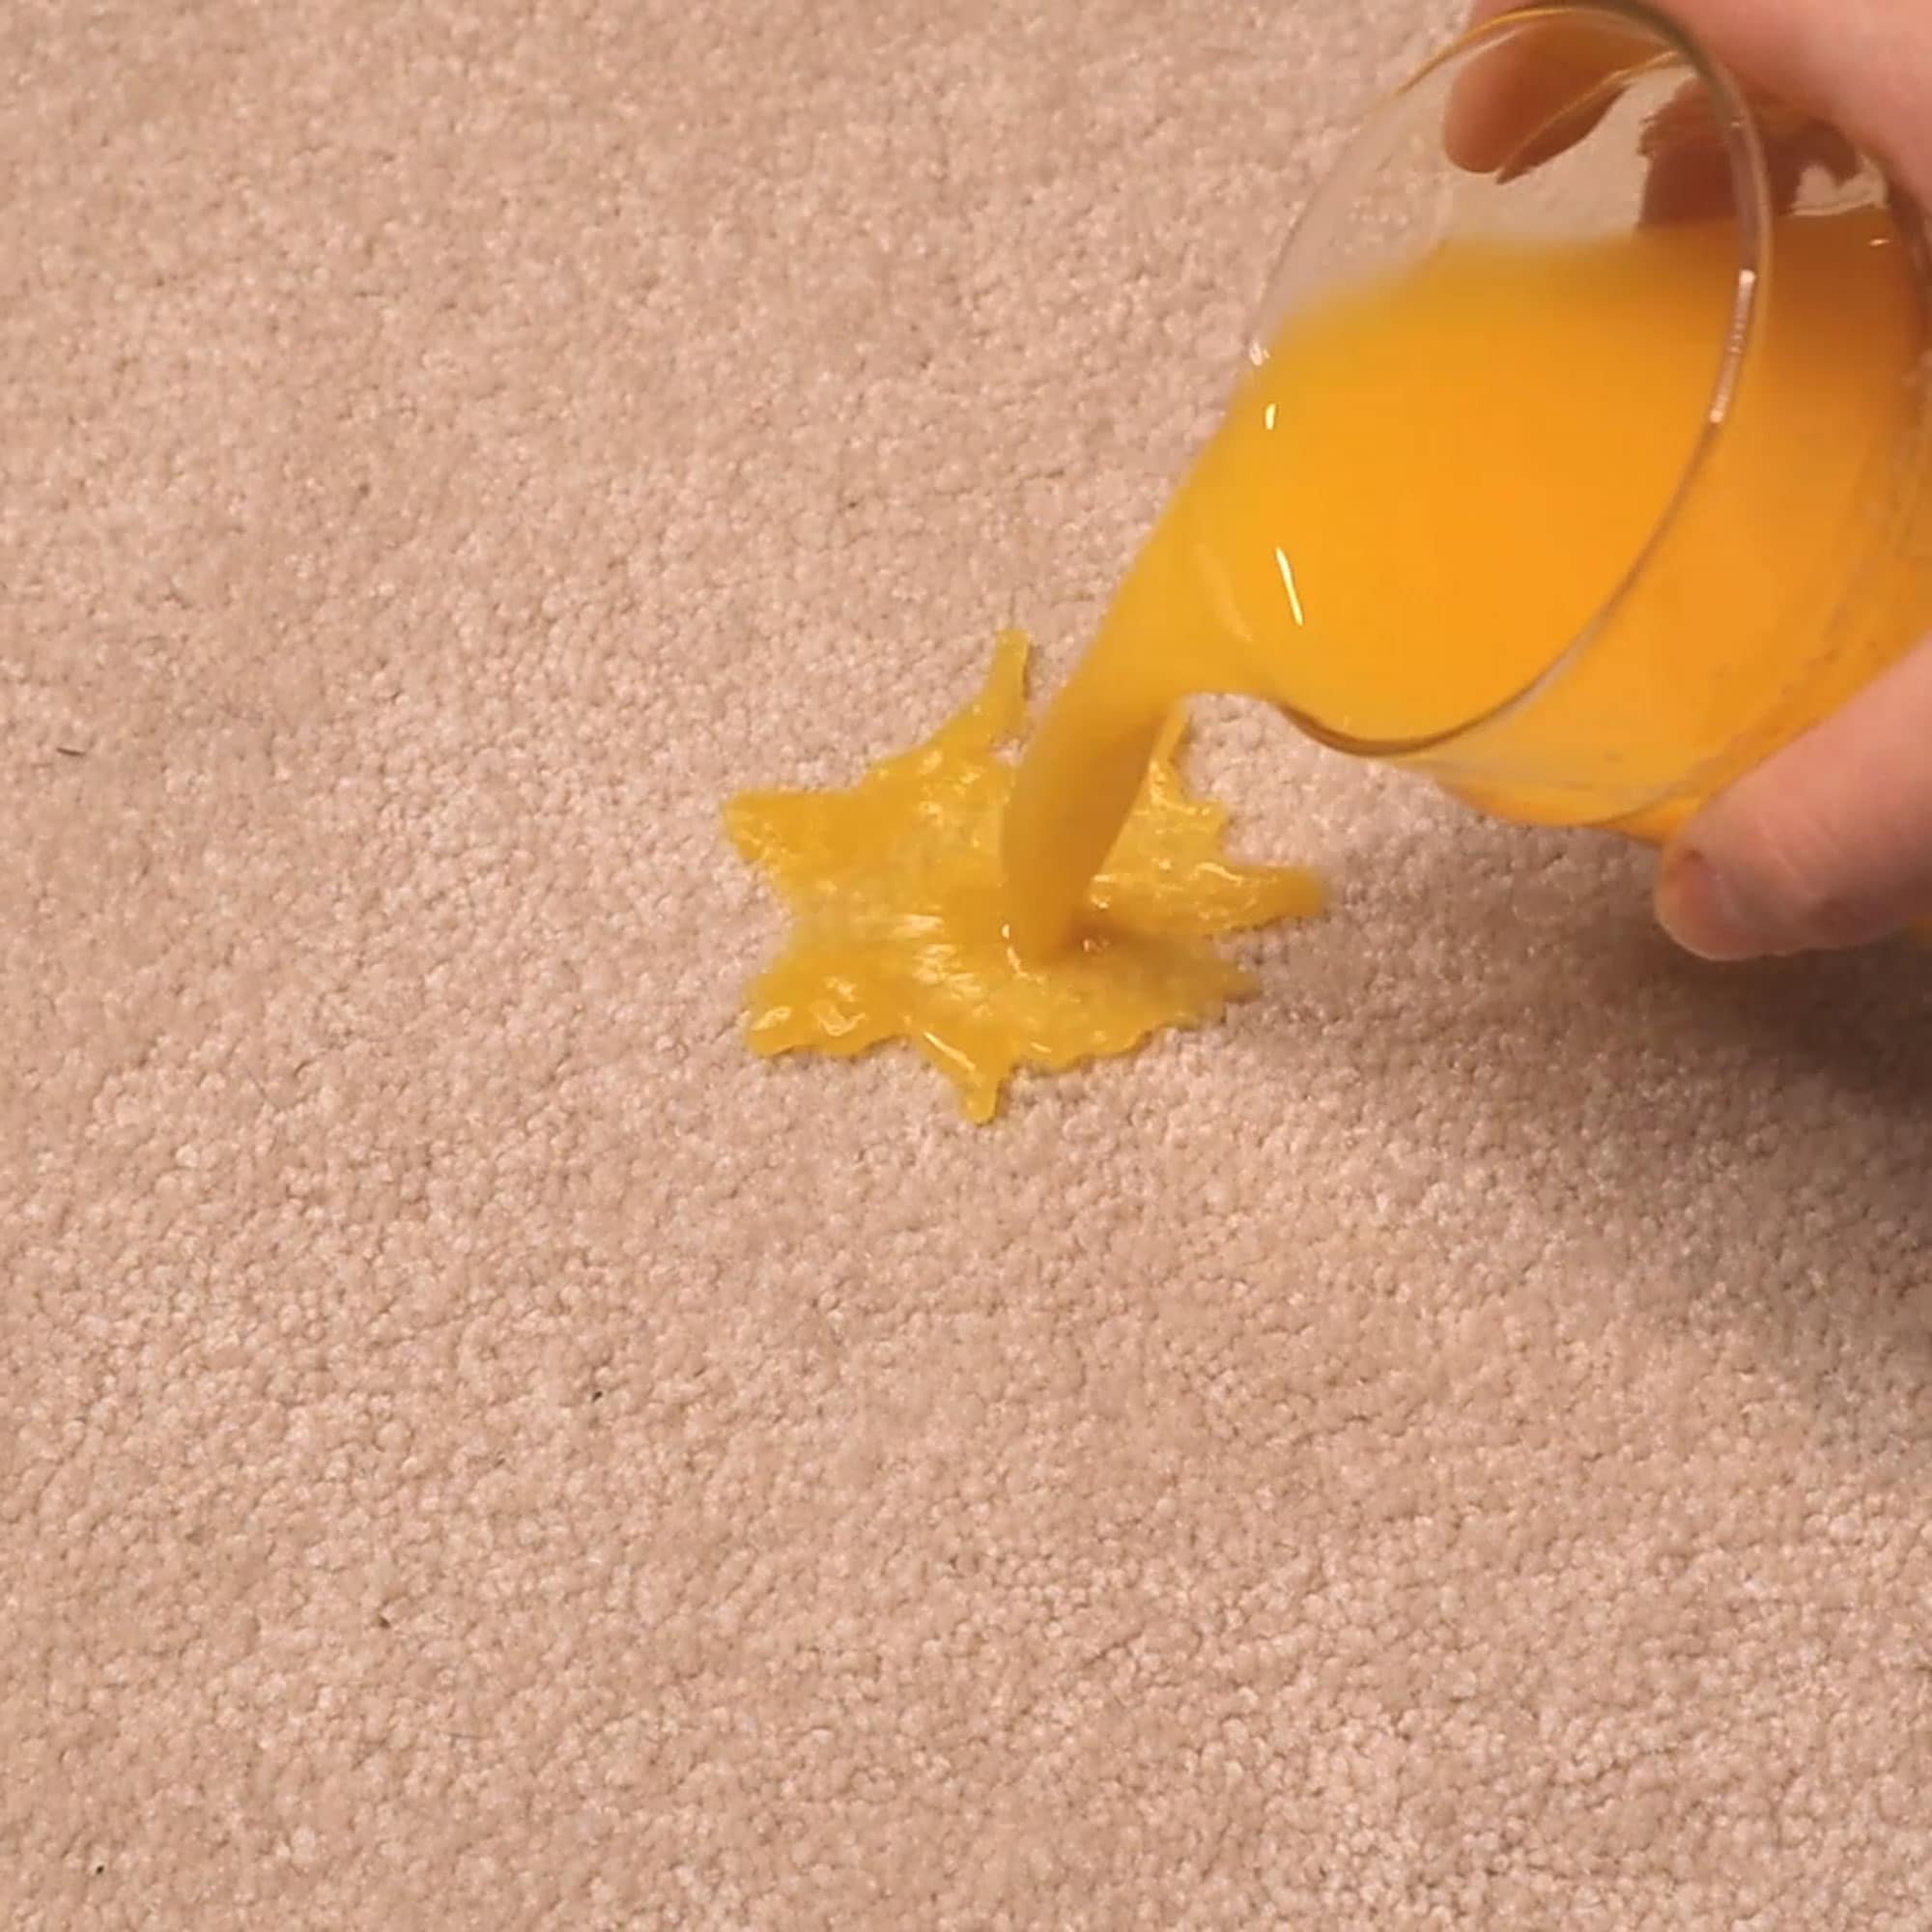 orange juice being spilled on carpet